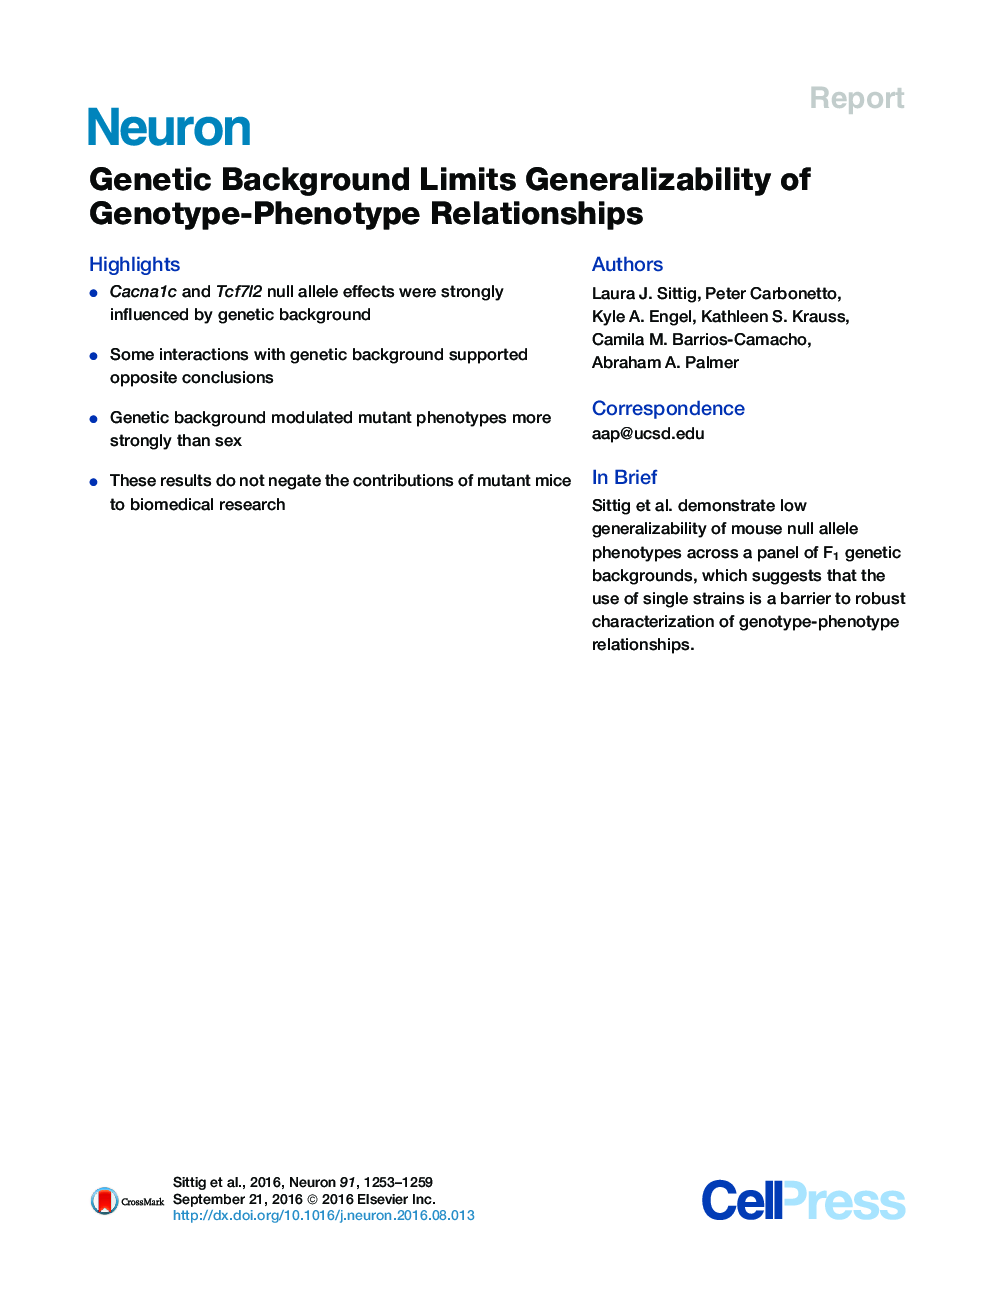 Genetic Background Limits Generalizability of Genotype-Phenotype Relationships